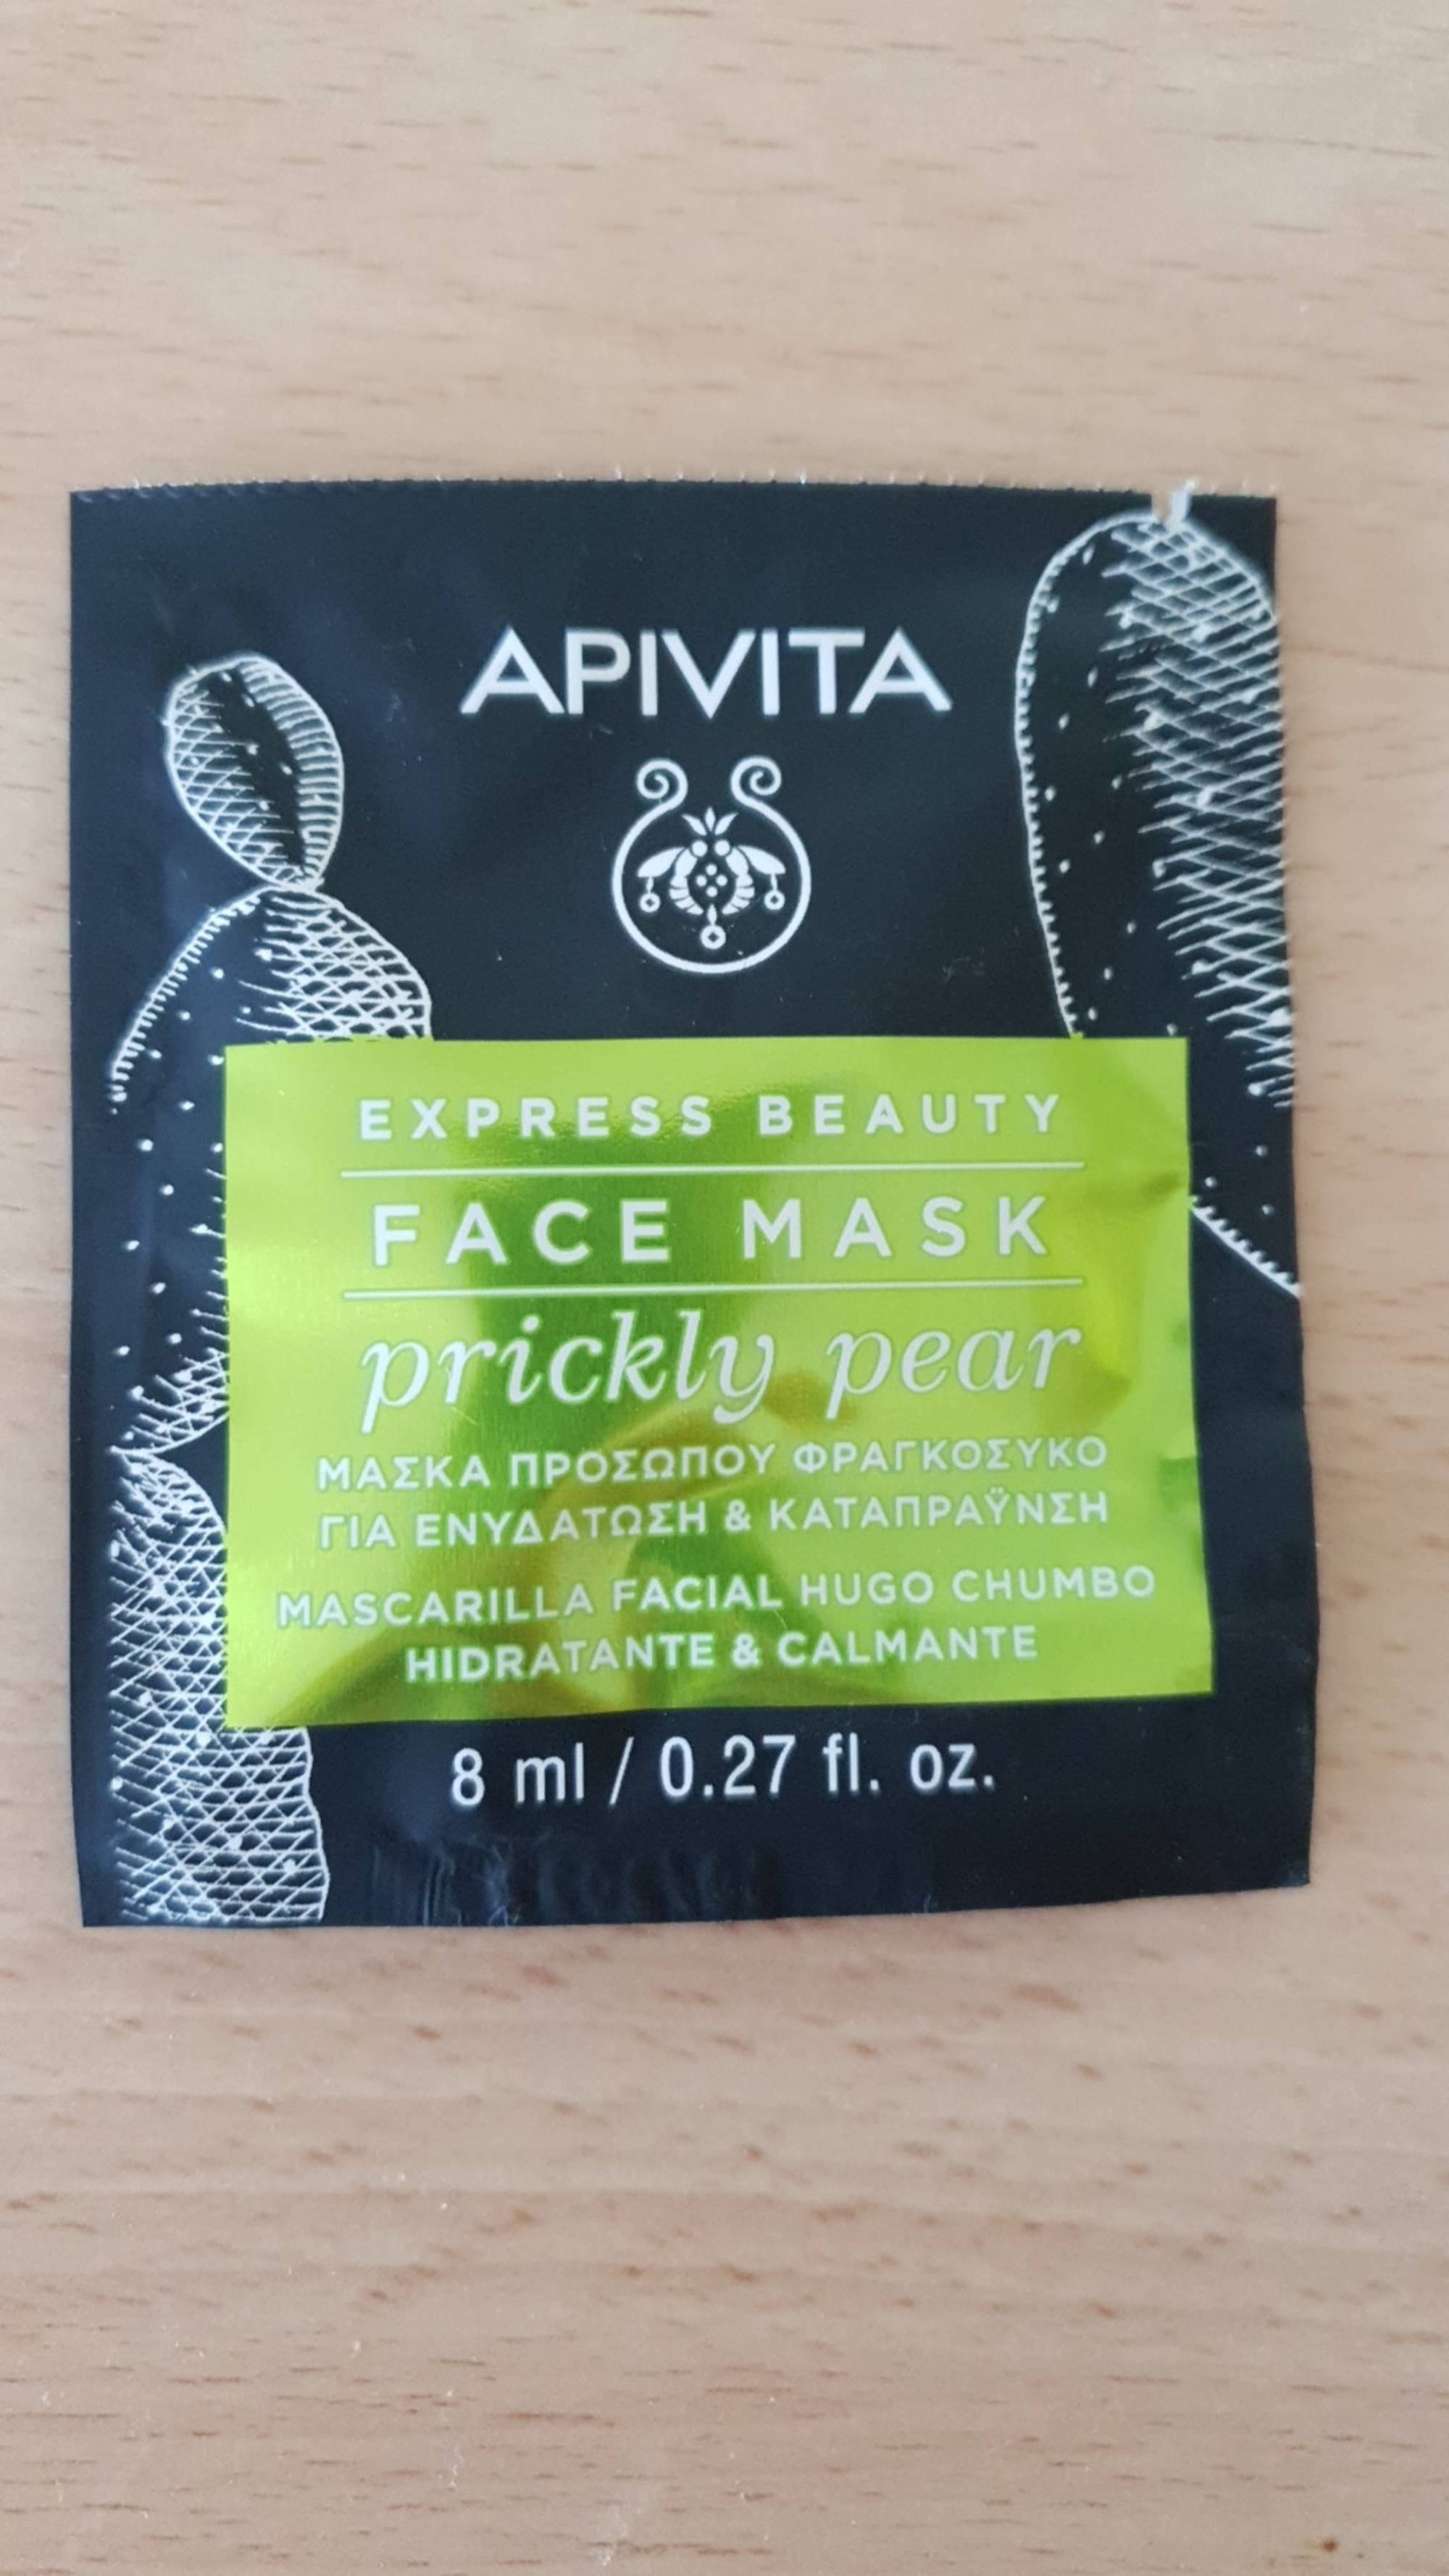 APIVITA - Express beauty - Face mask prickly pear